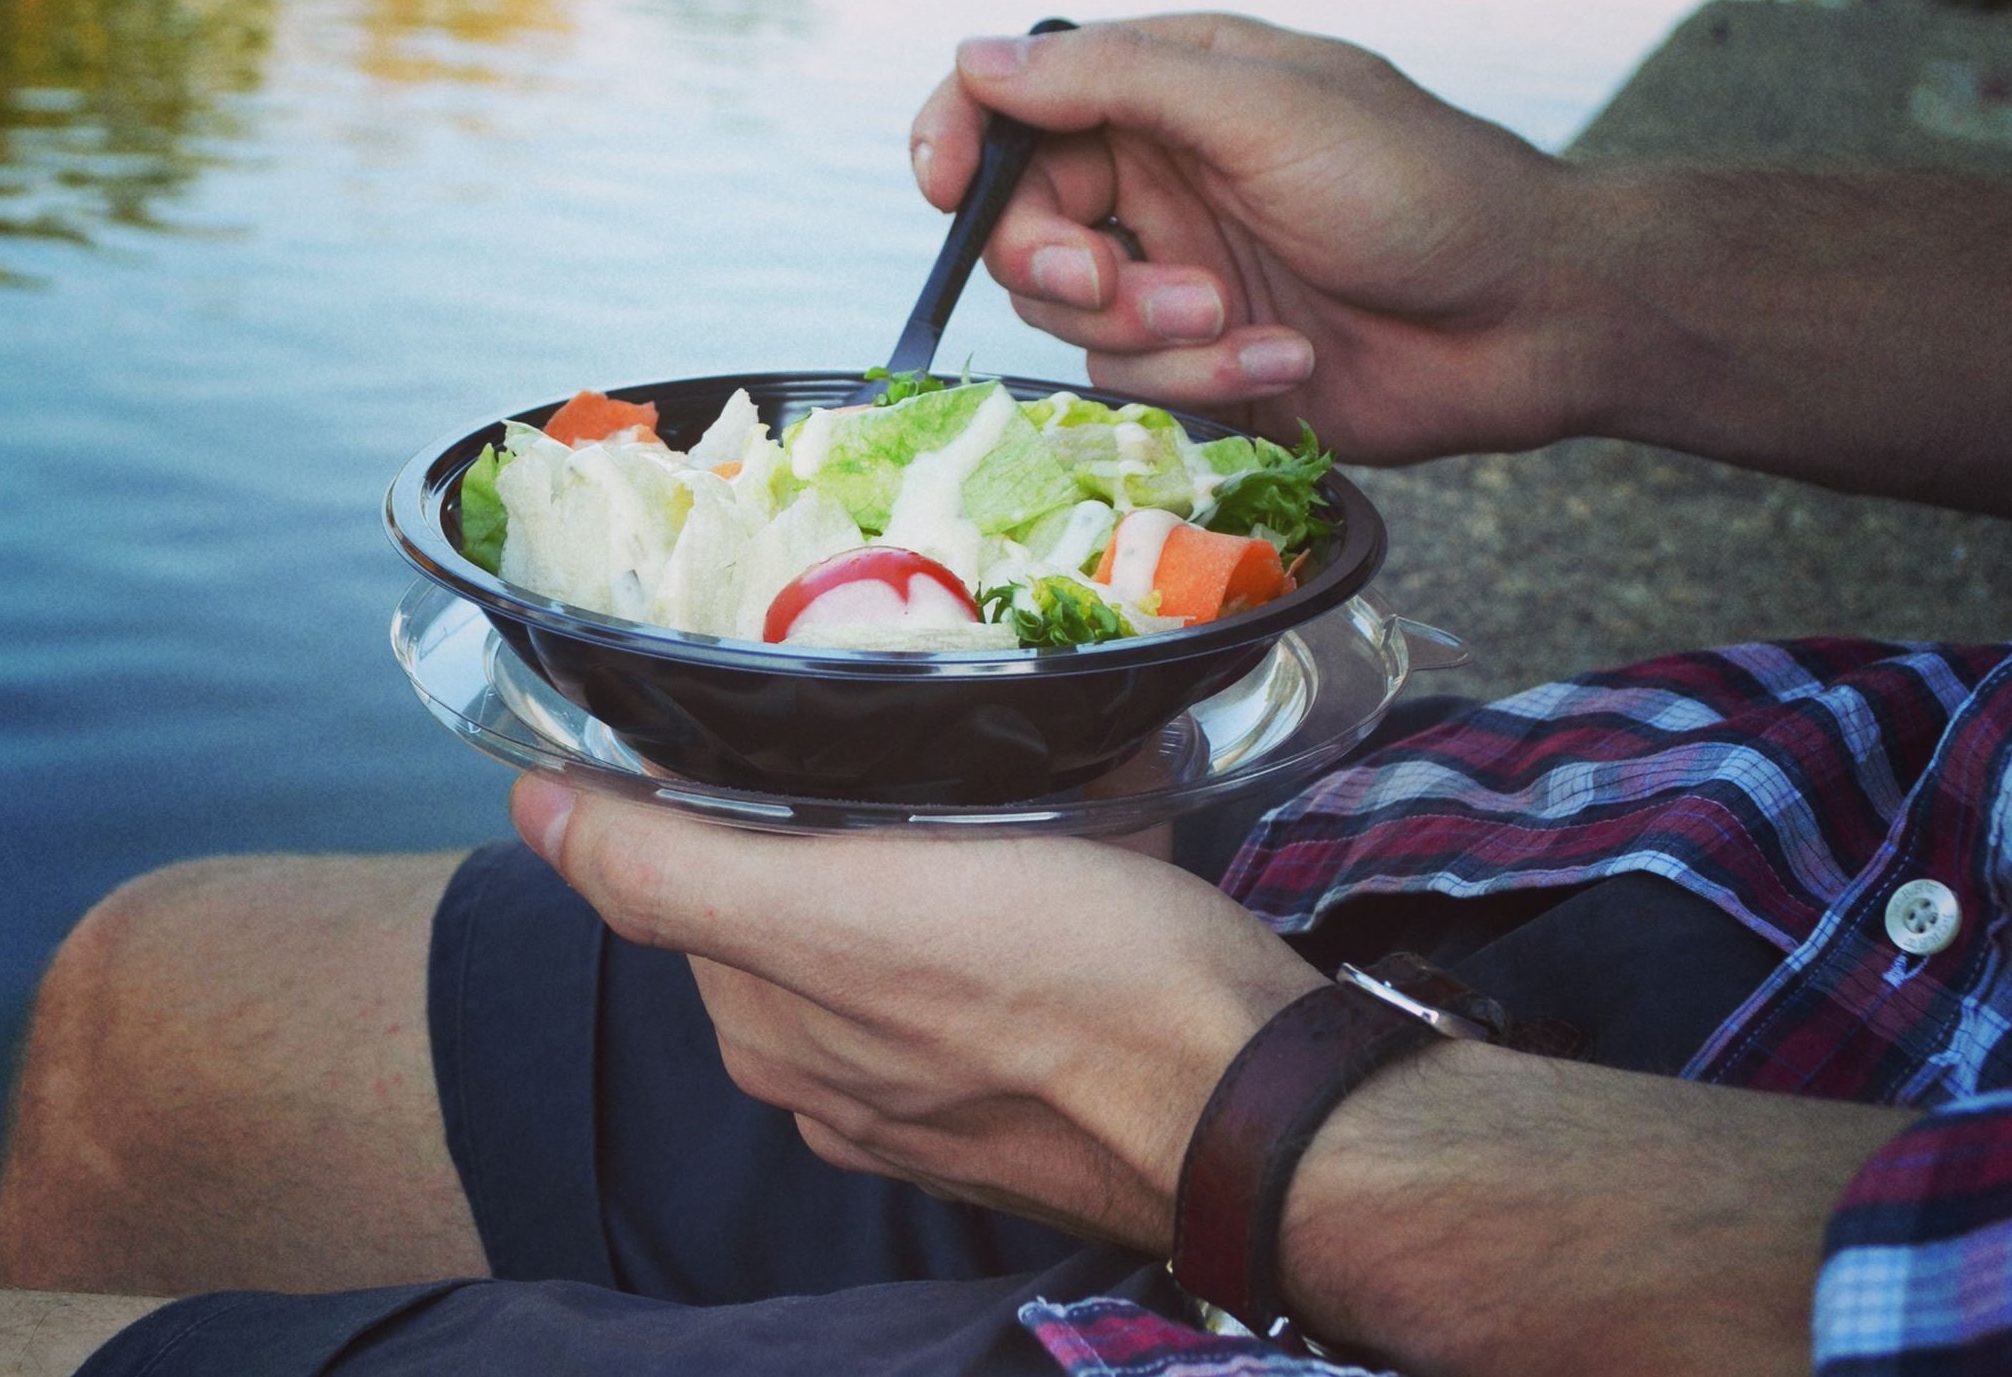 food recalls include goldfish, ritz, mcdonalds, and more – Mcdonald's salad recall due to possible salmonella.